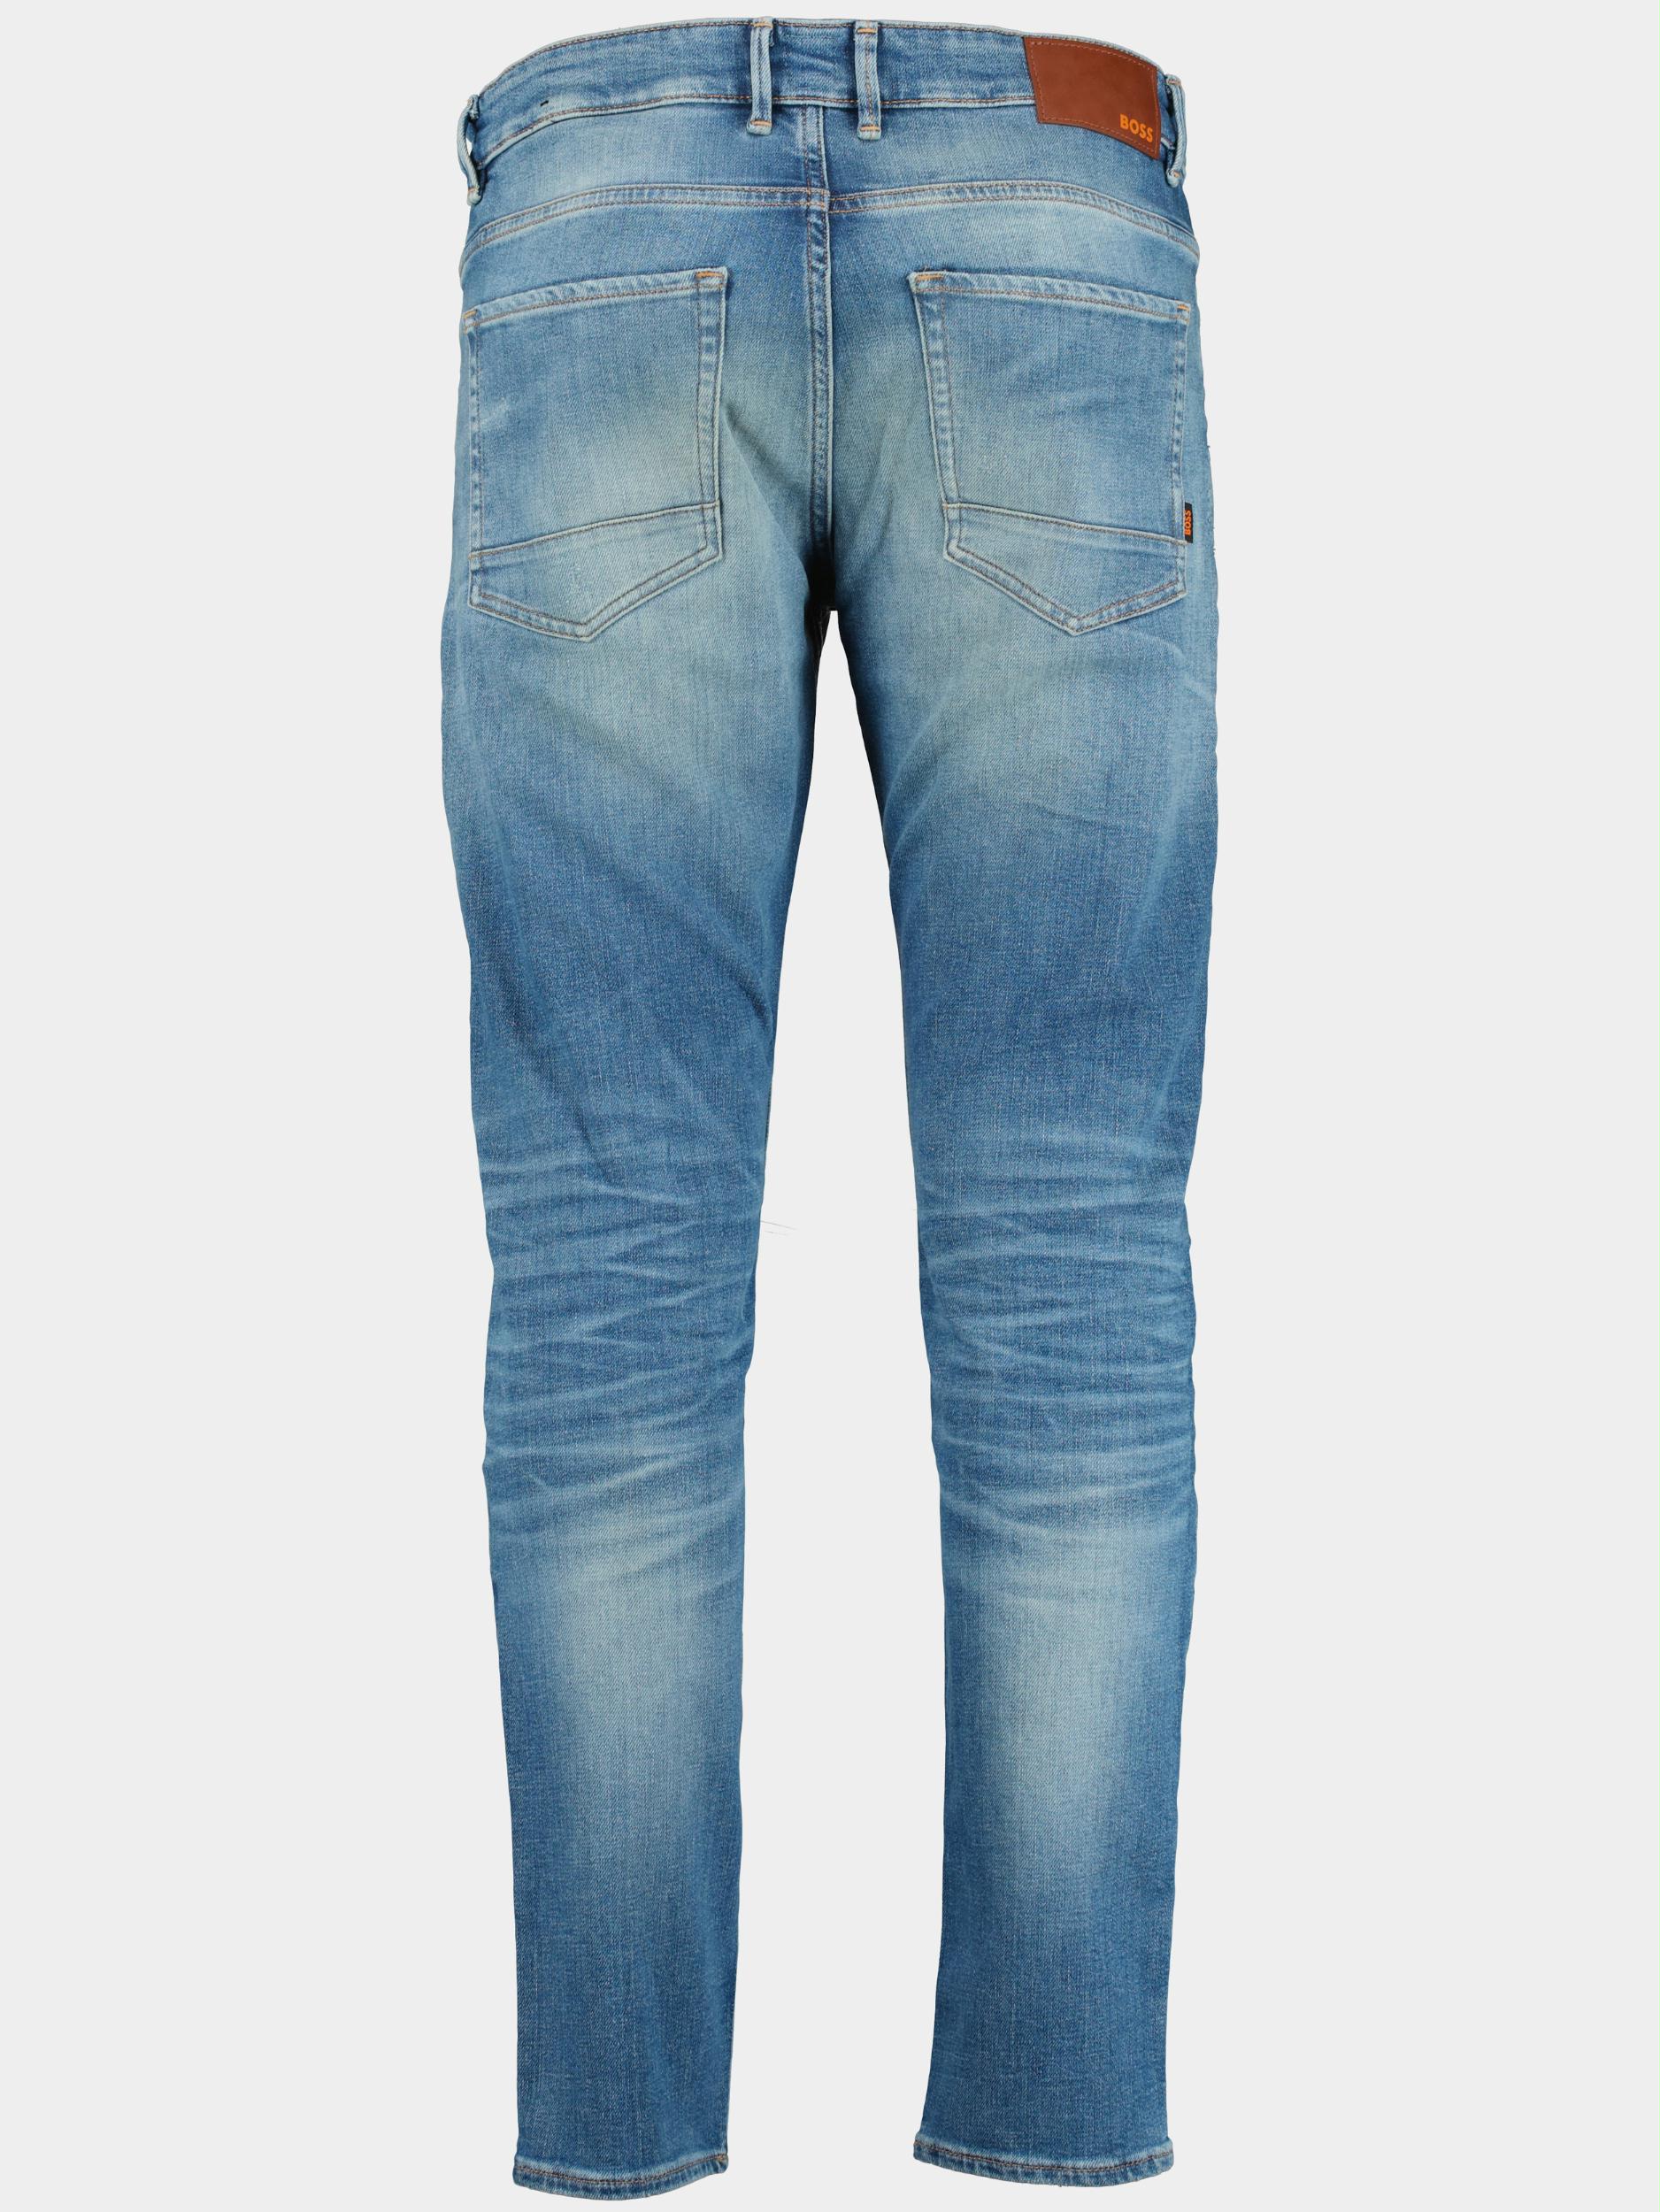 BOSS Orange 5-Pocket Jeans Blauw Delano BC-C 10248981 01 50490013/430